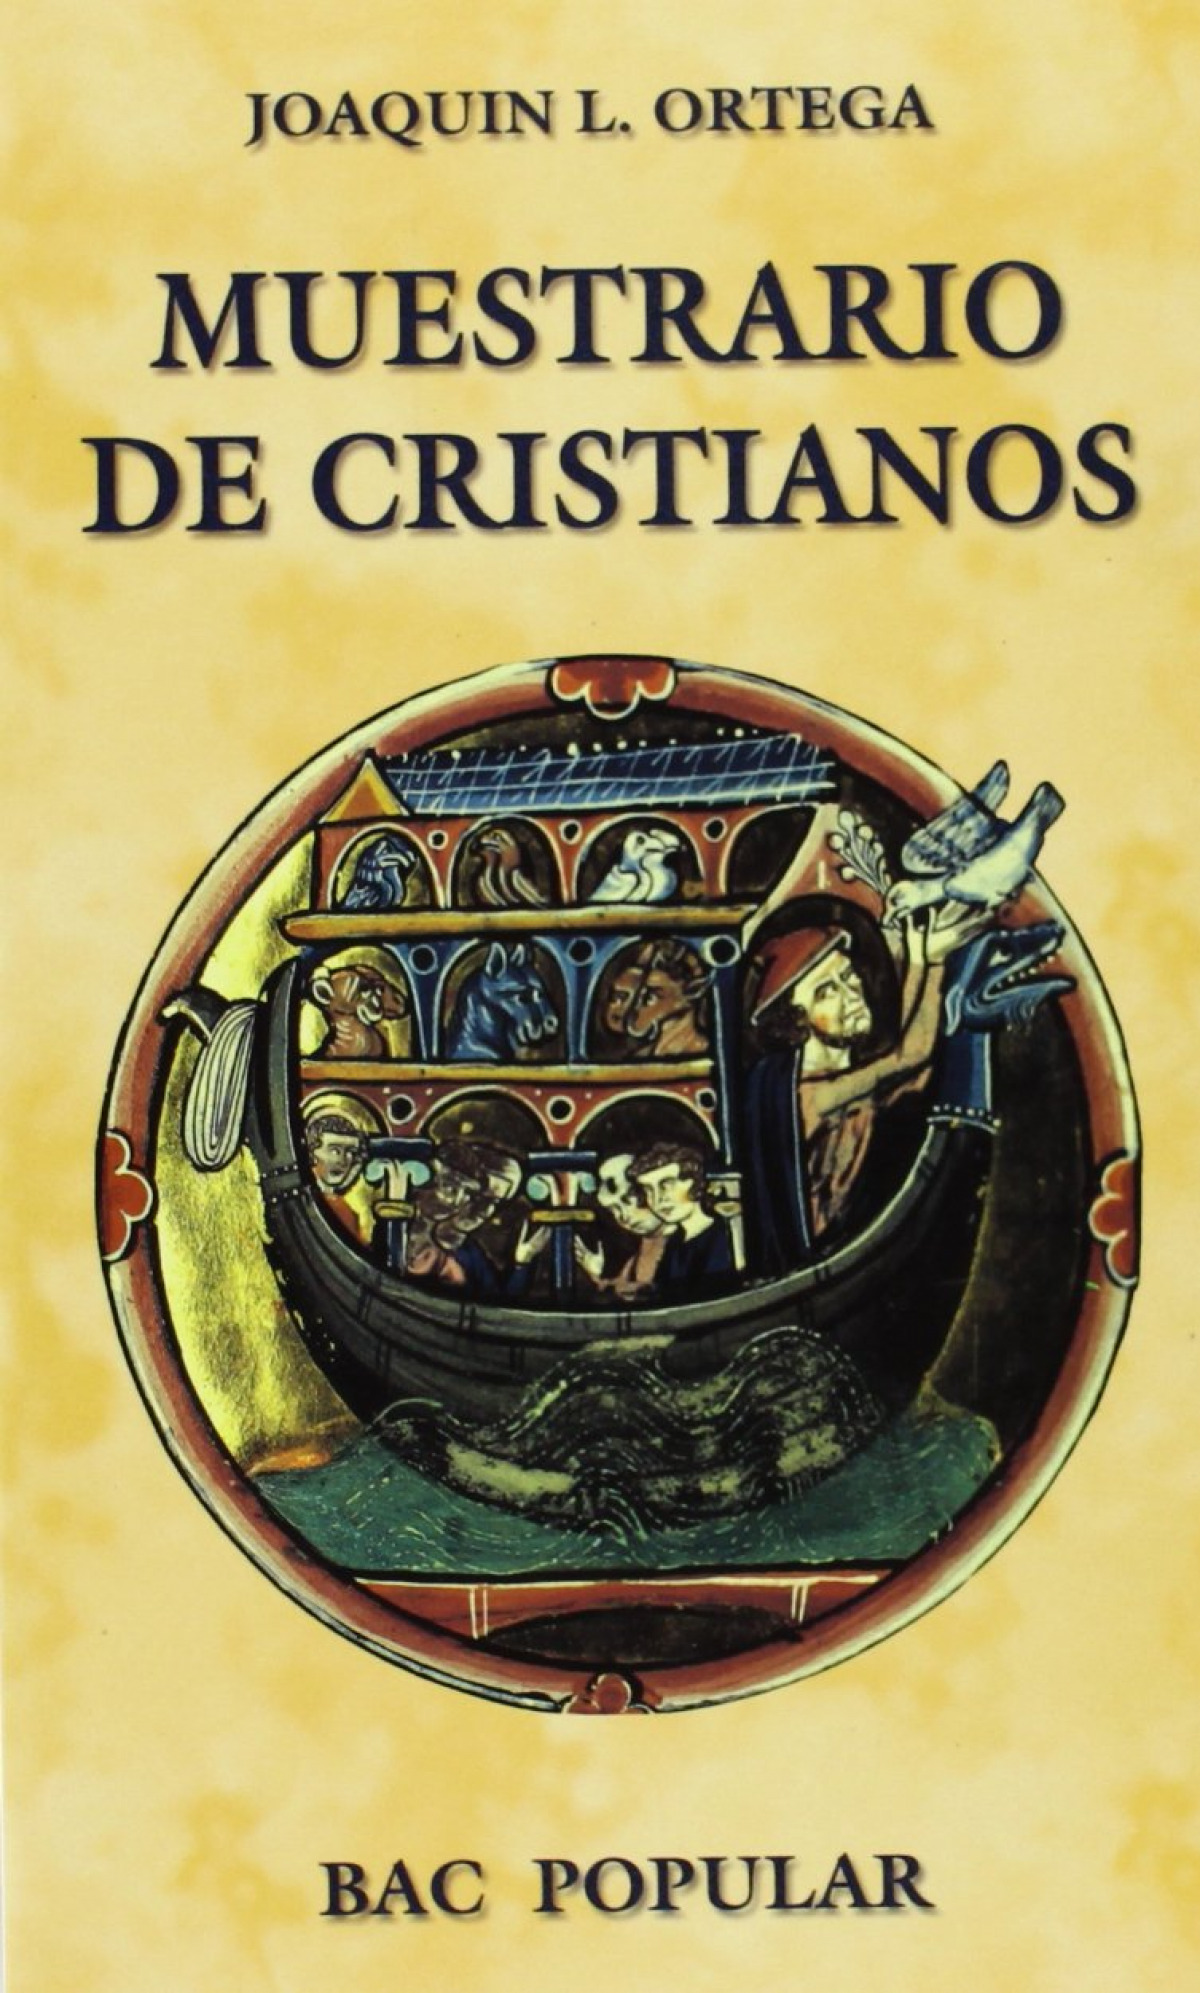 Muestrario de cristianos - Ortega, Joaquin